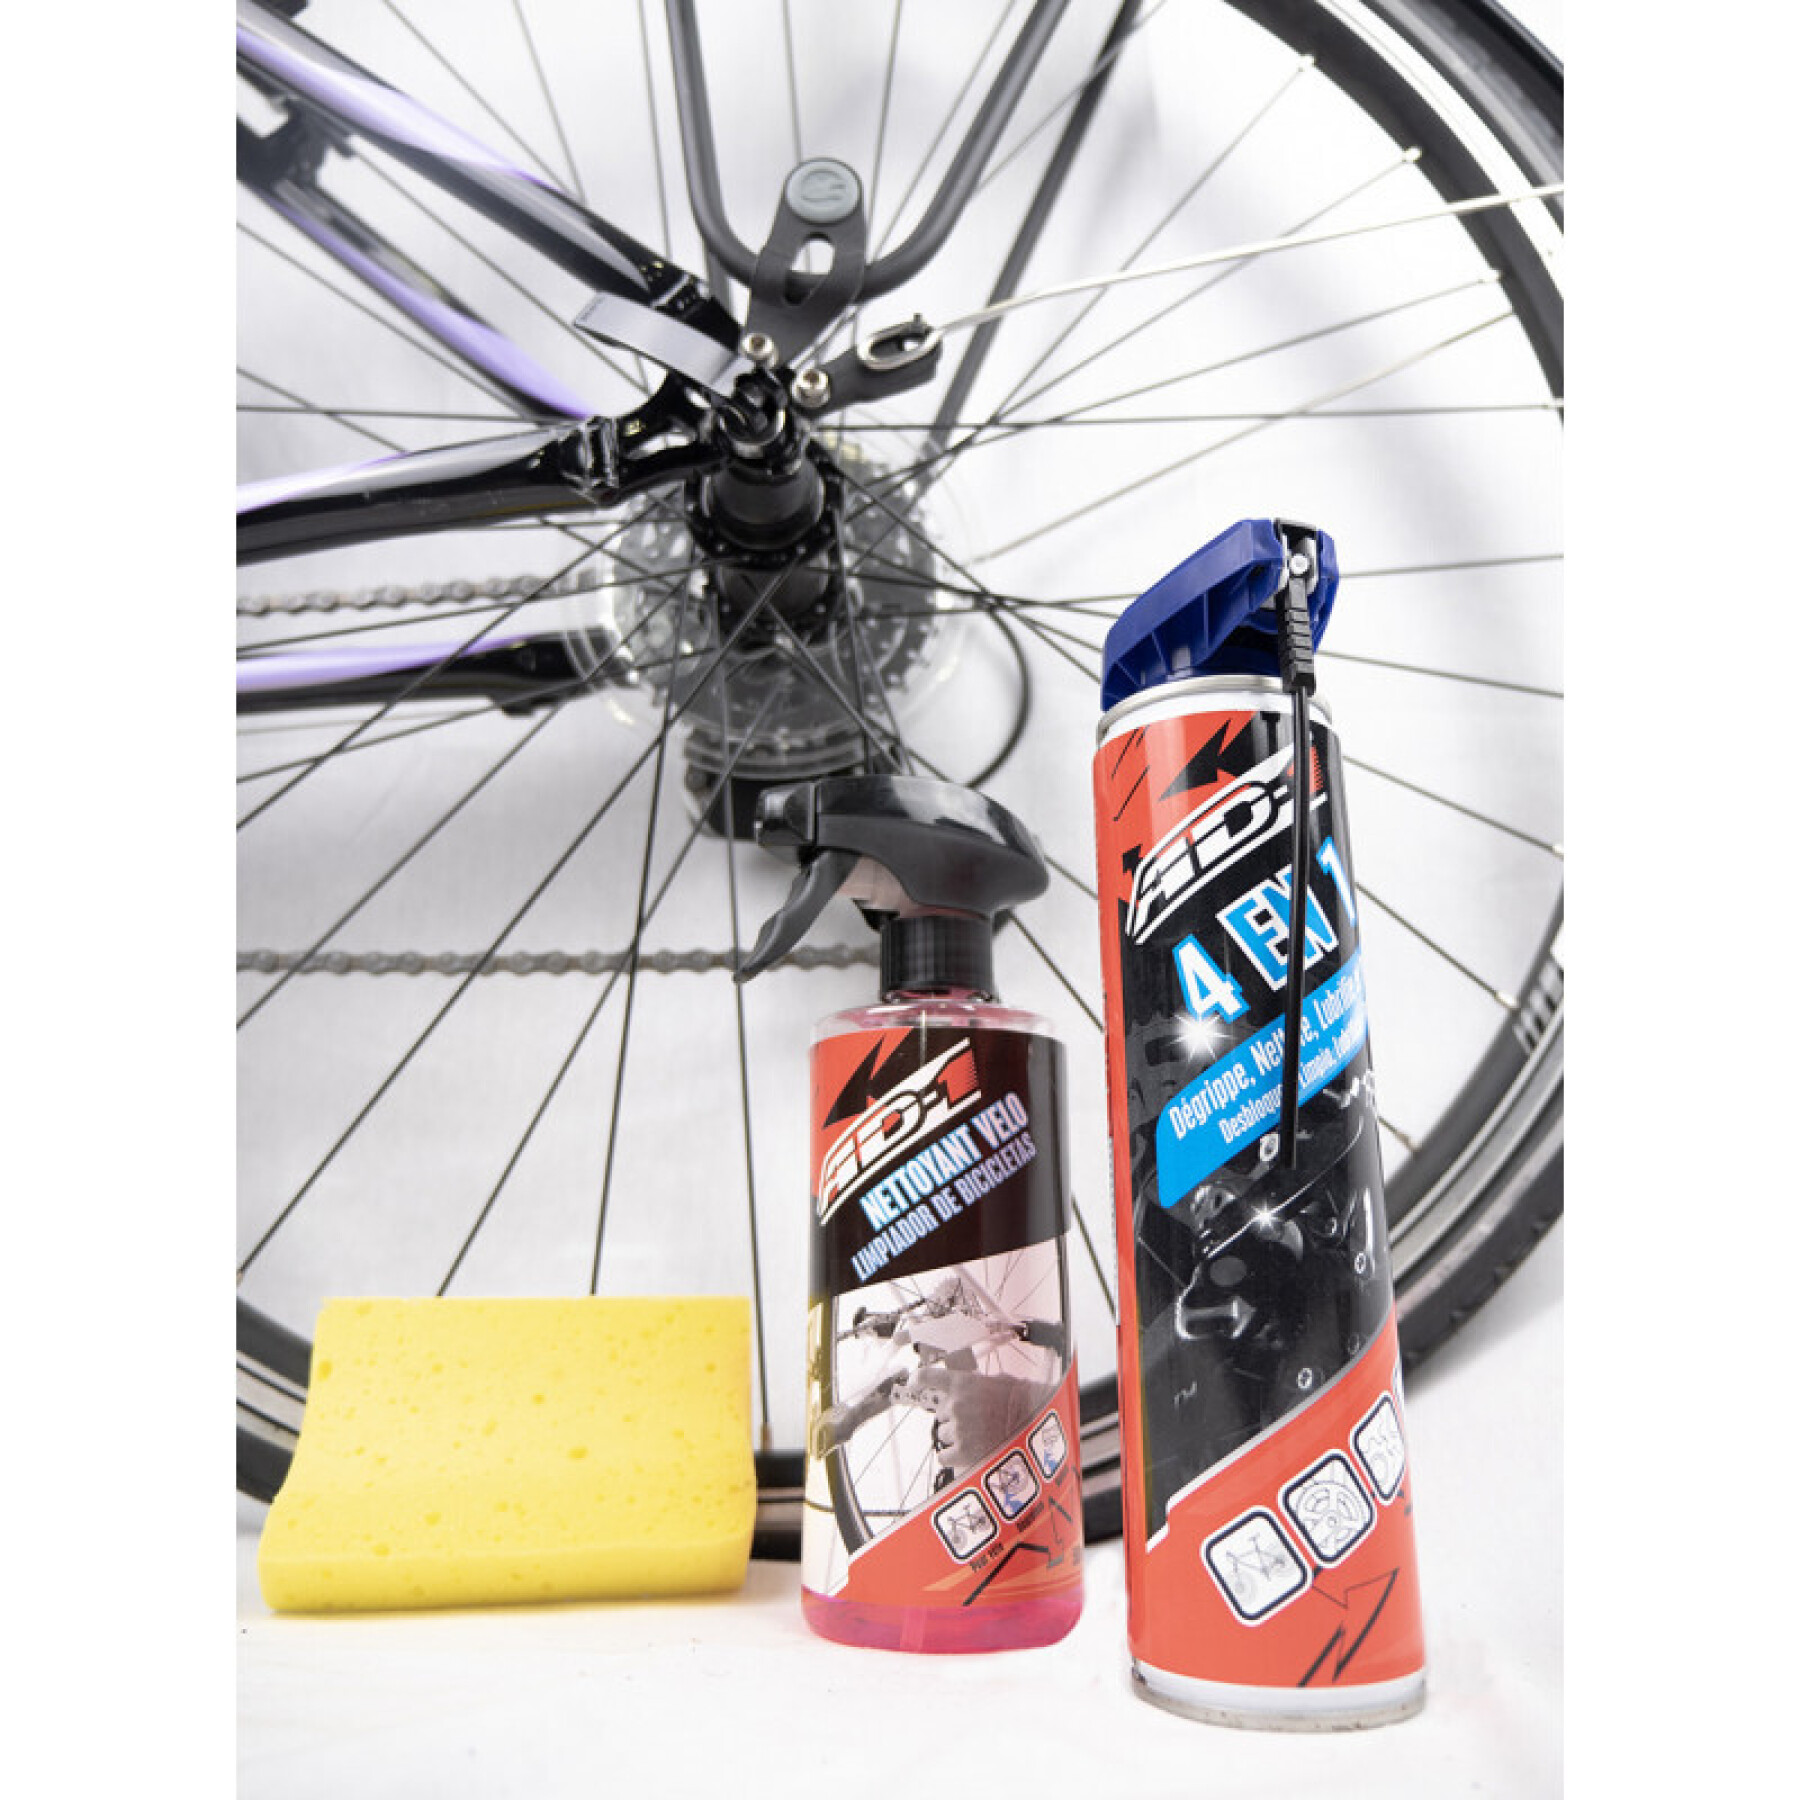 All-in-1 kit, sponge, sleeve and bike cleaner AD-1